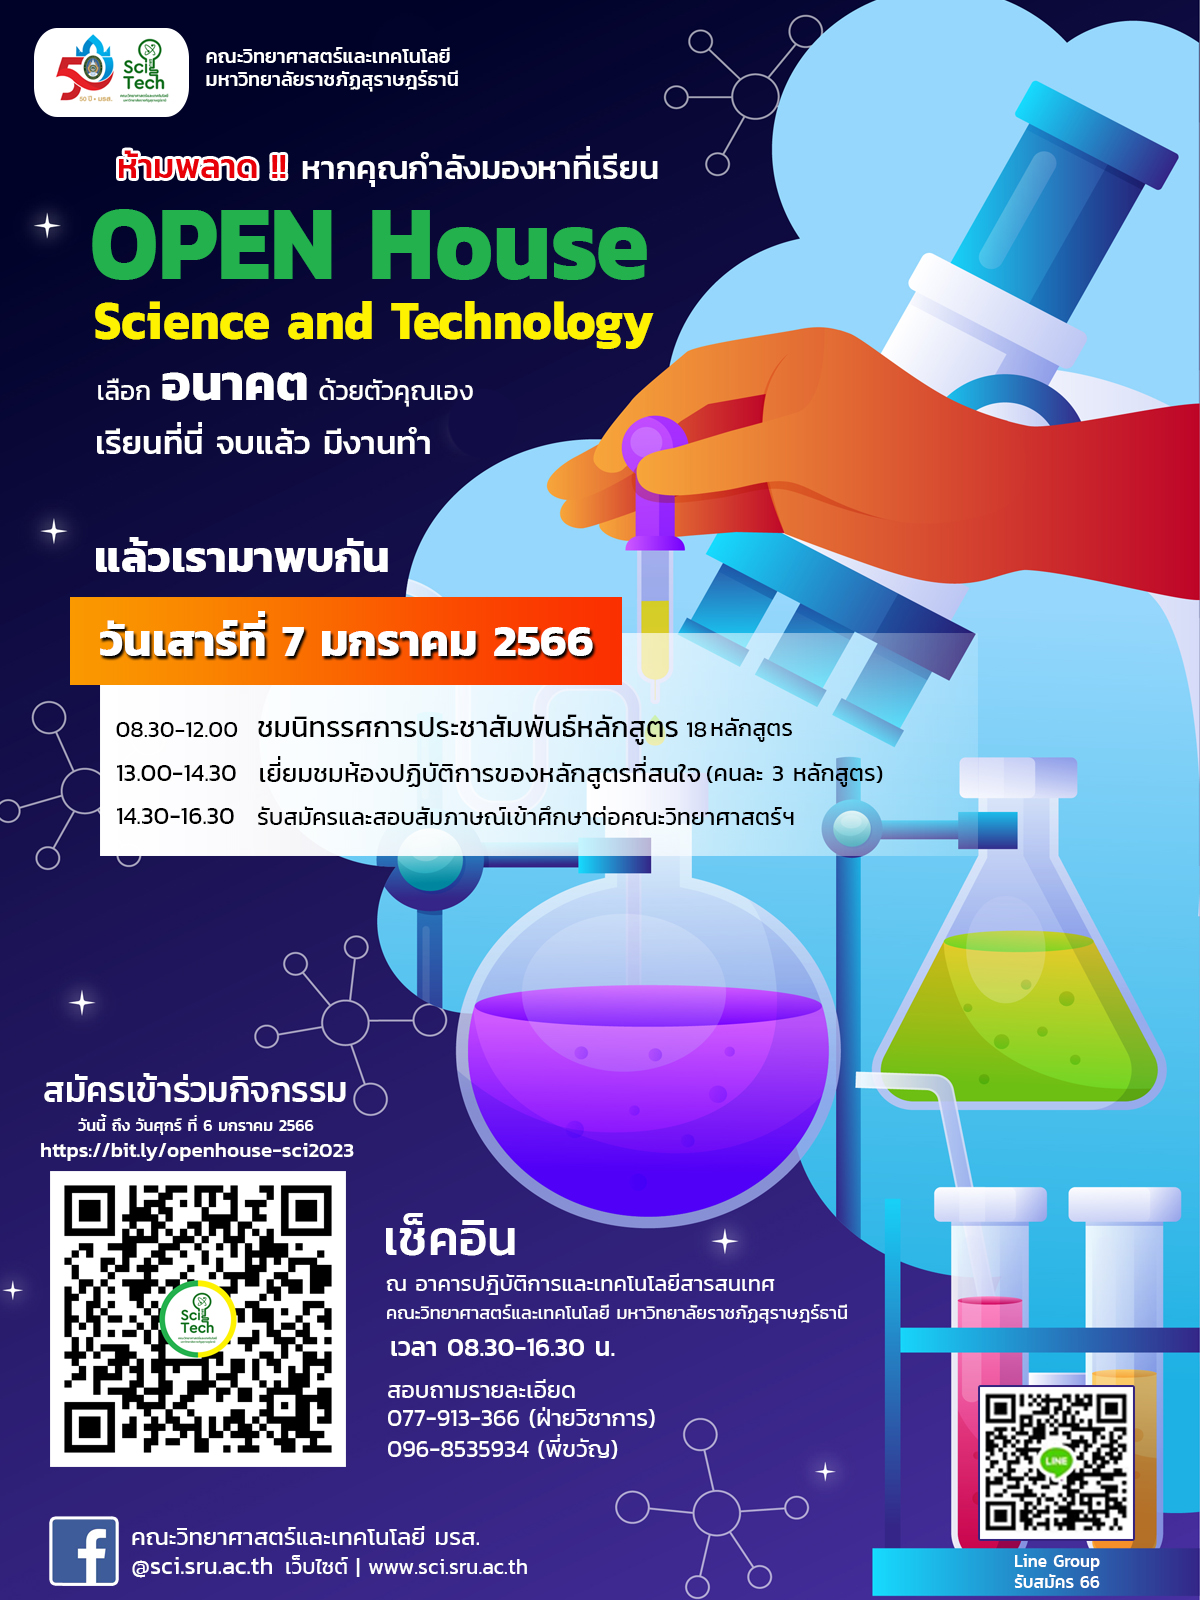 Open House Science and Technology หกรรม Shopping การศึกษา ครั้งยิ่งใหญ่